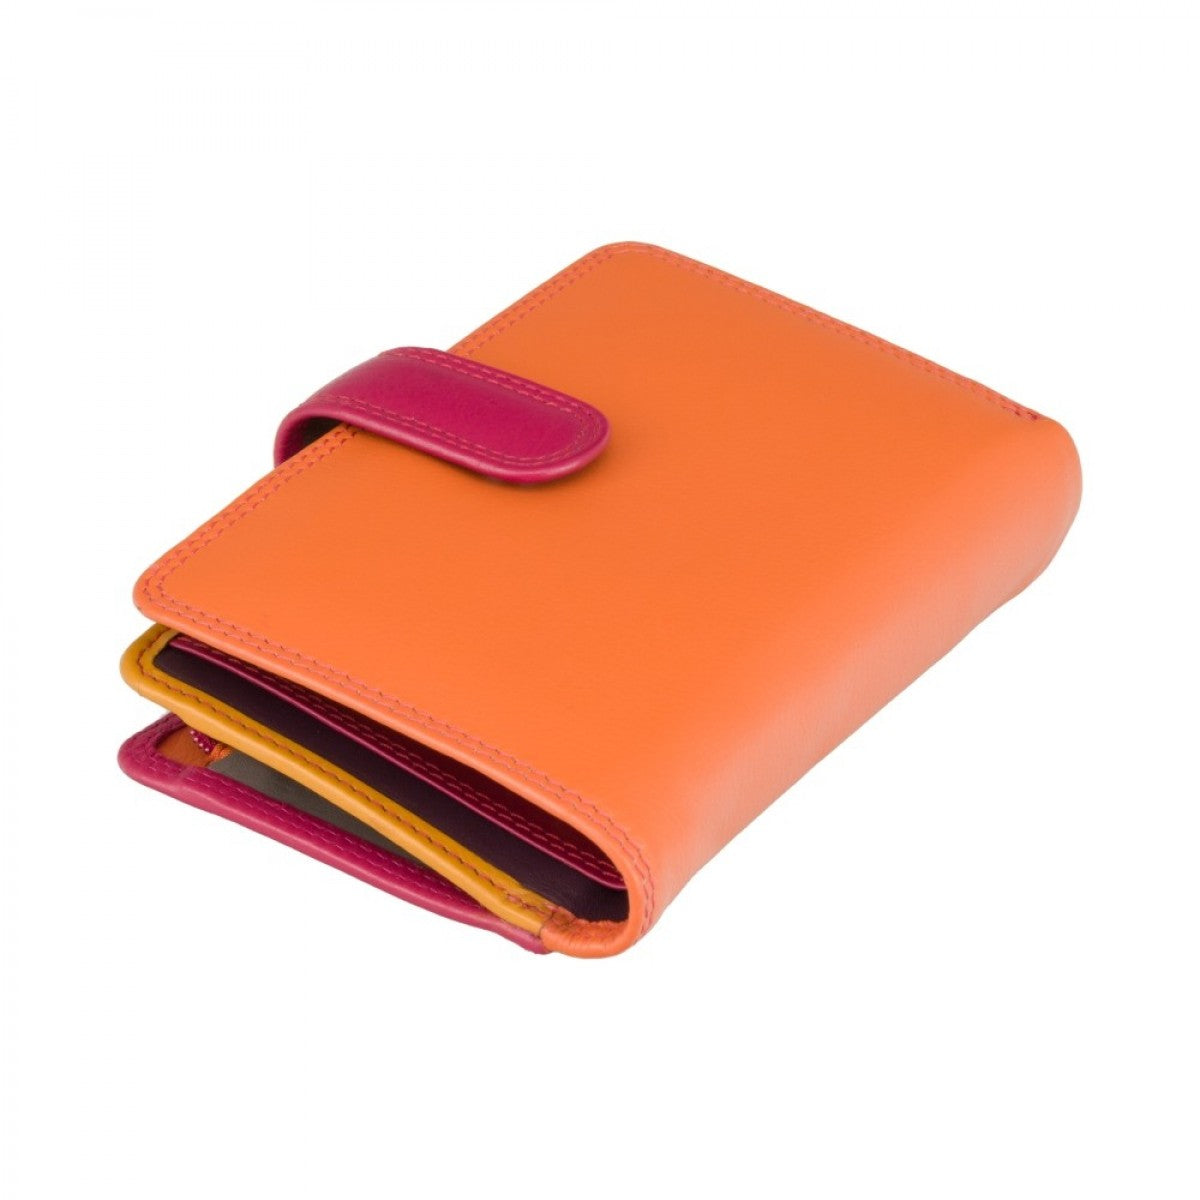 Оранжевый женский кошелек Visconti RB51 Fiji (Orange Multi)